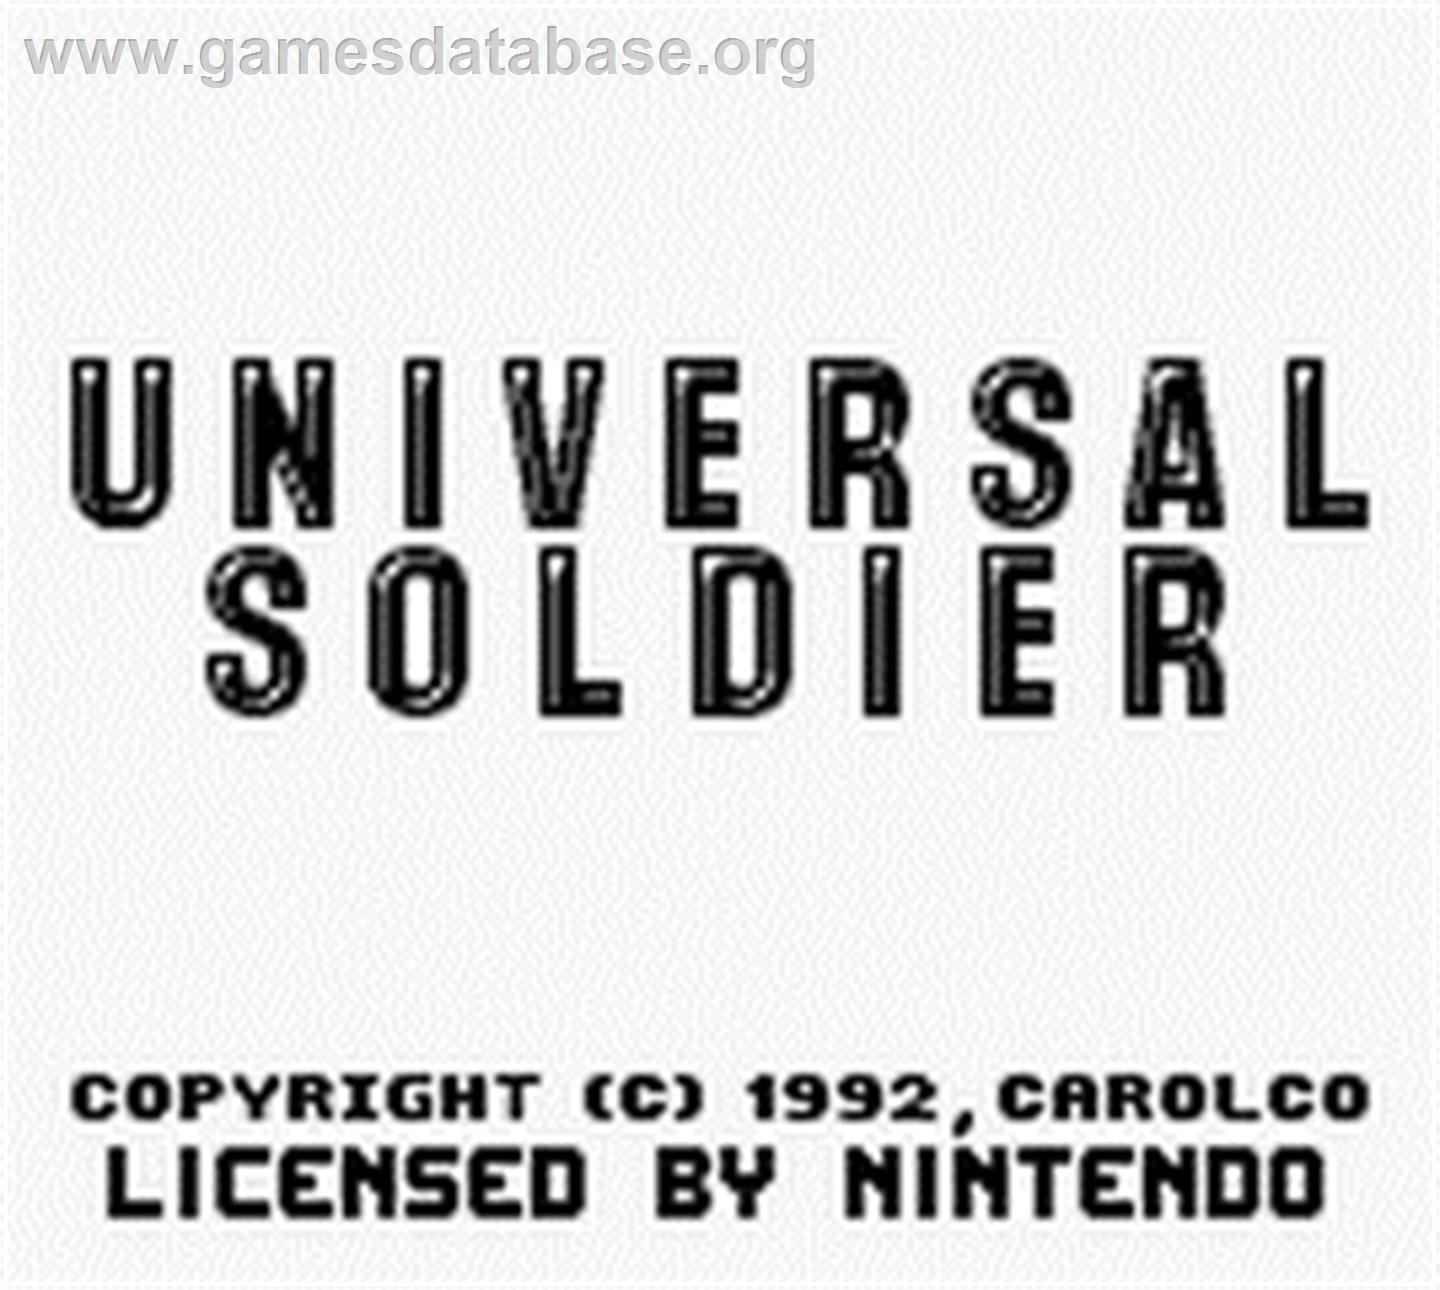 Universal Soldier - Nintendo Game Boy - Artwork - Title Screen